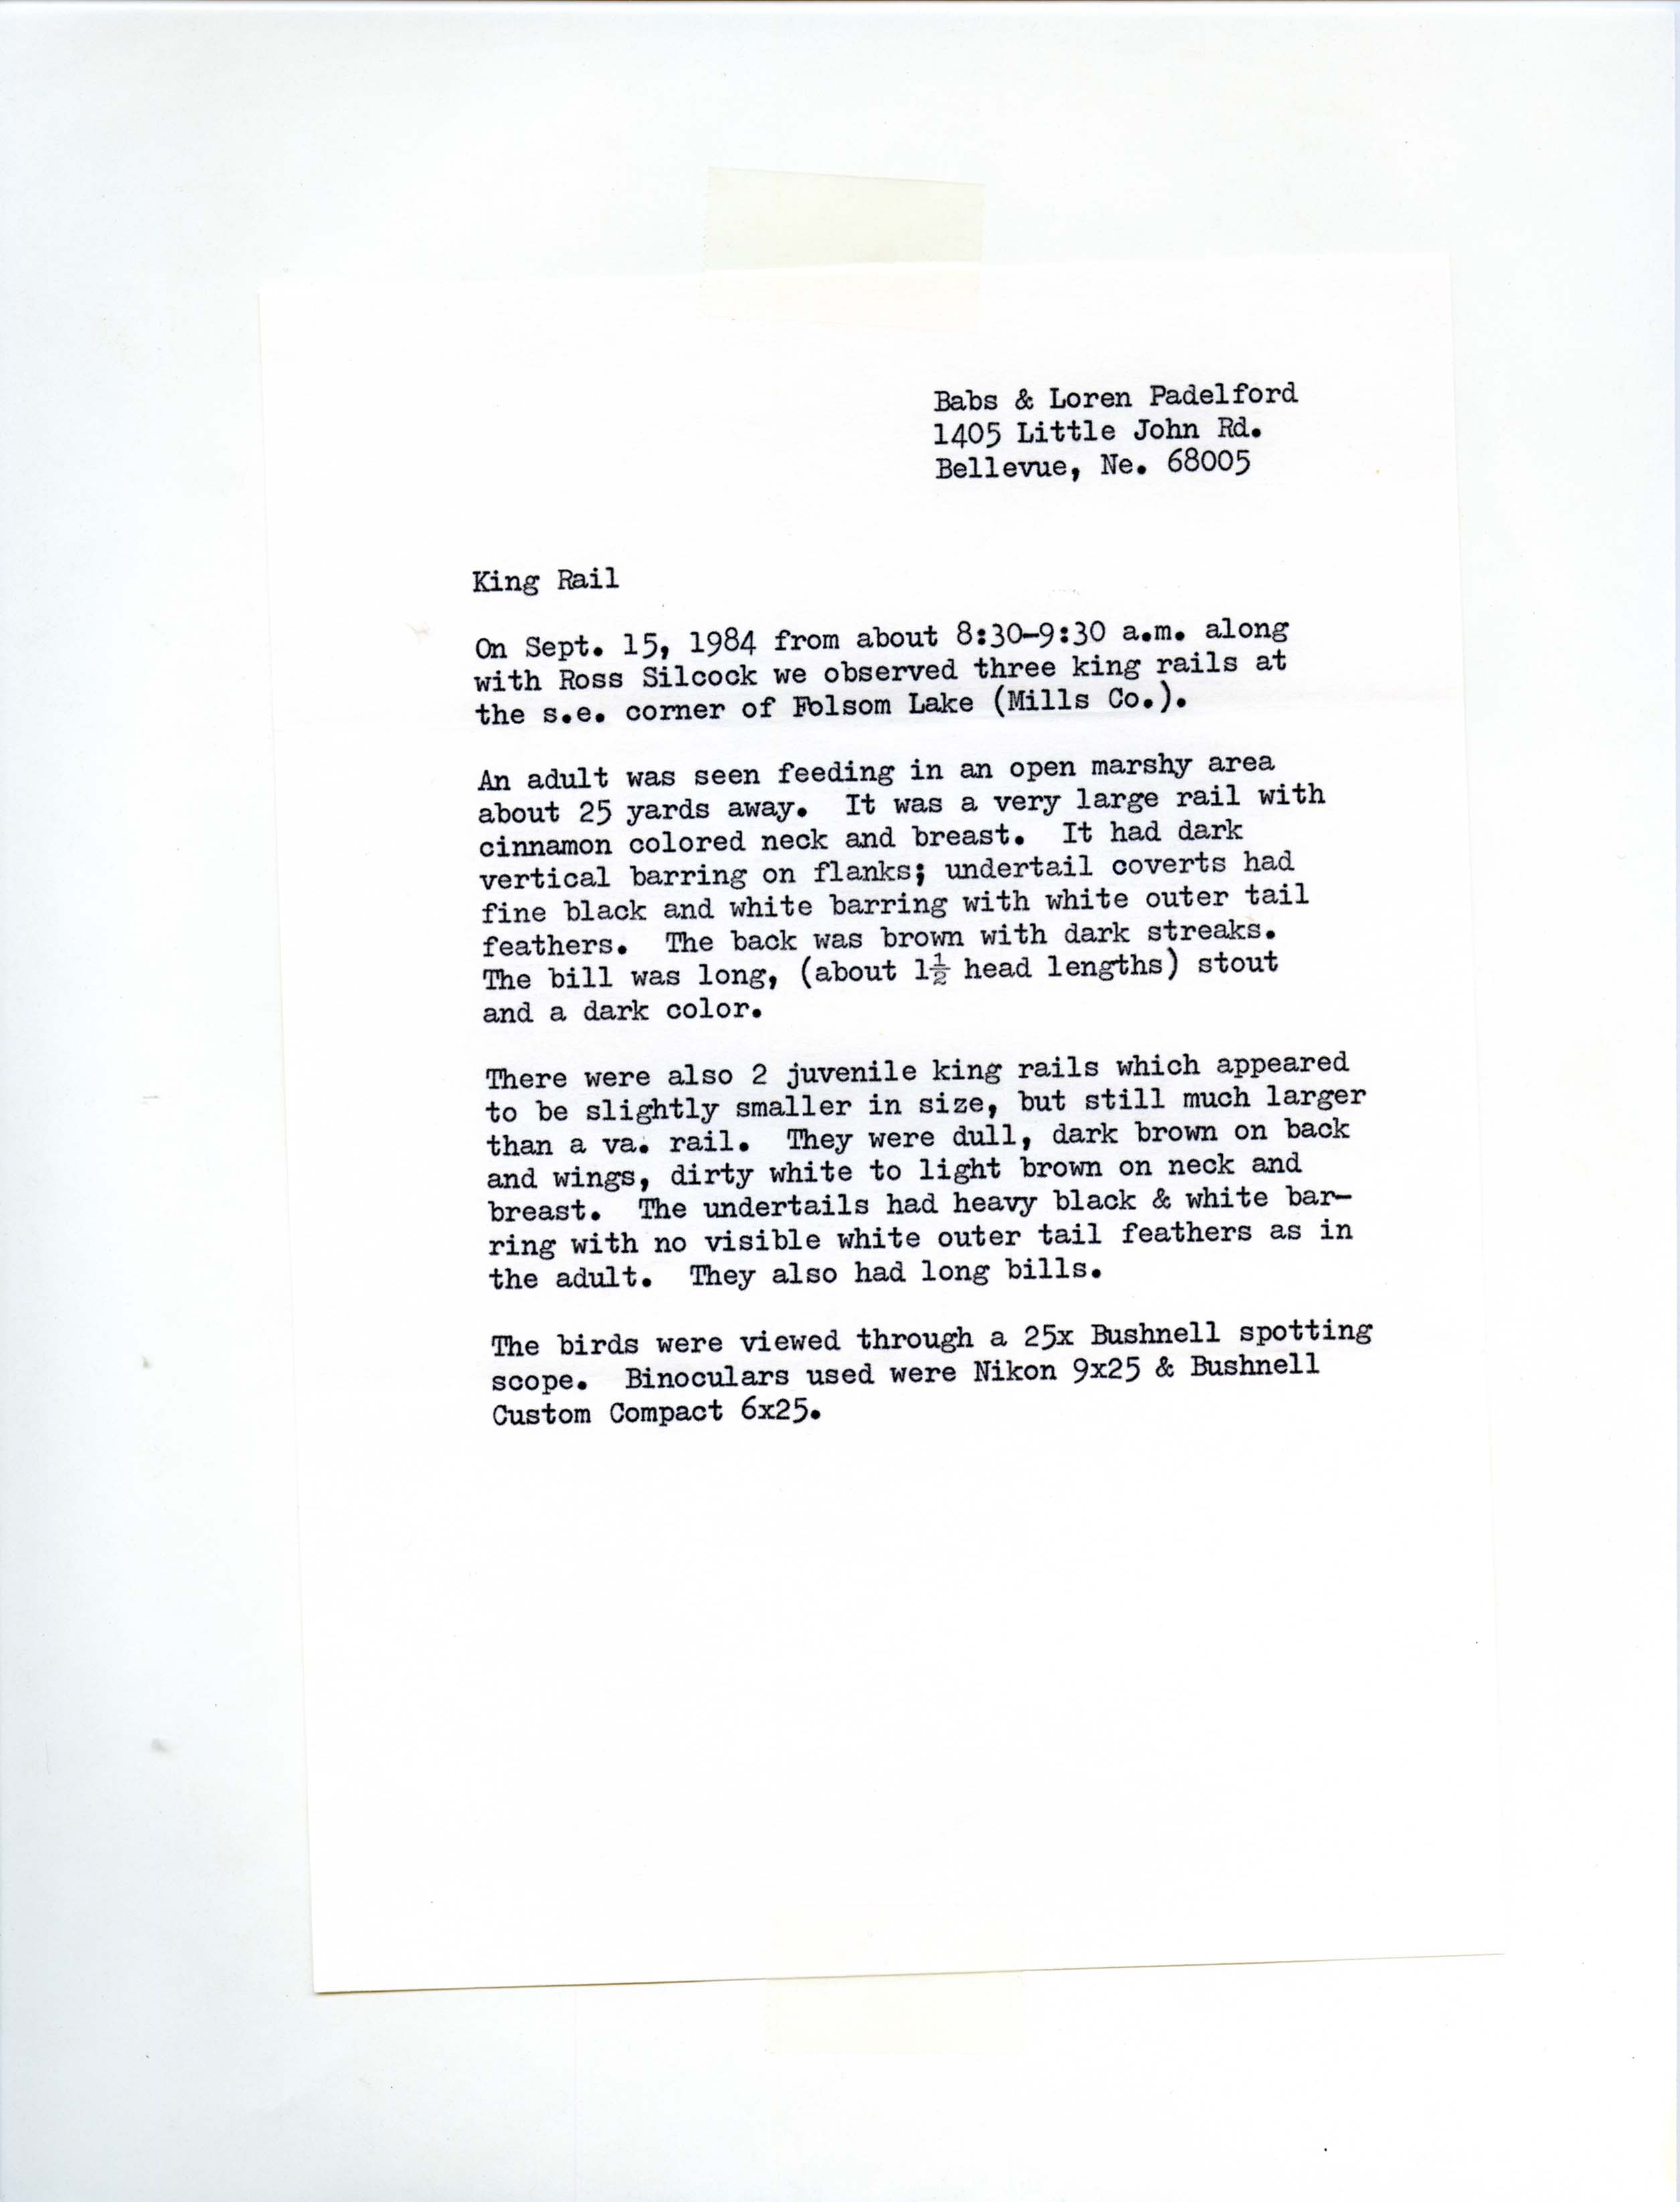 Rare bird documentation form for King Rail at Folsom Lake, 1984